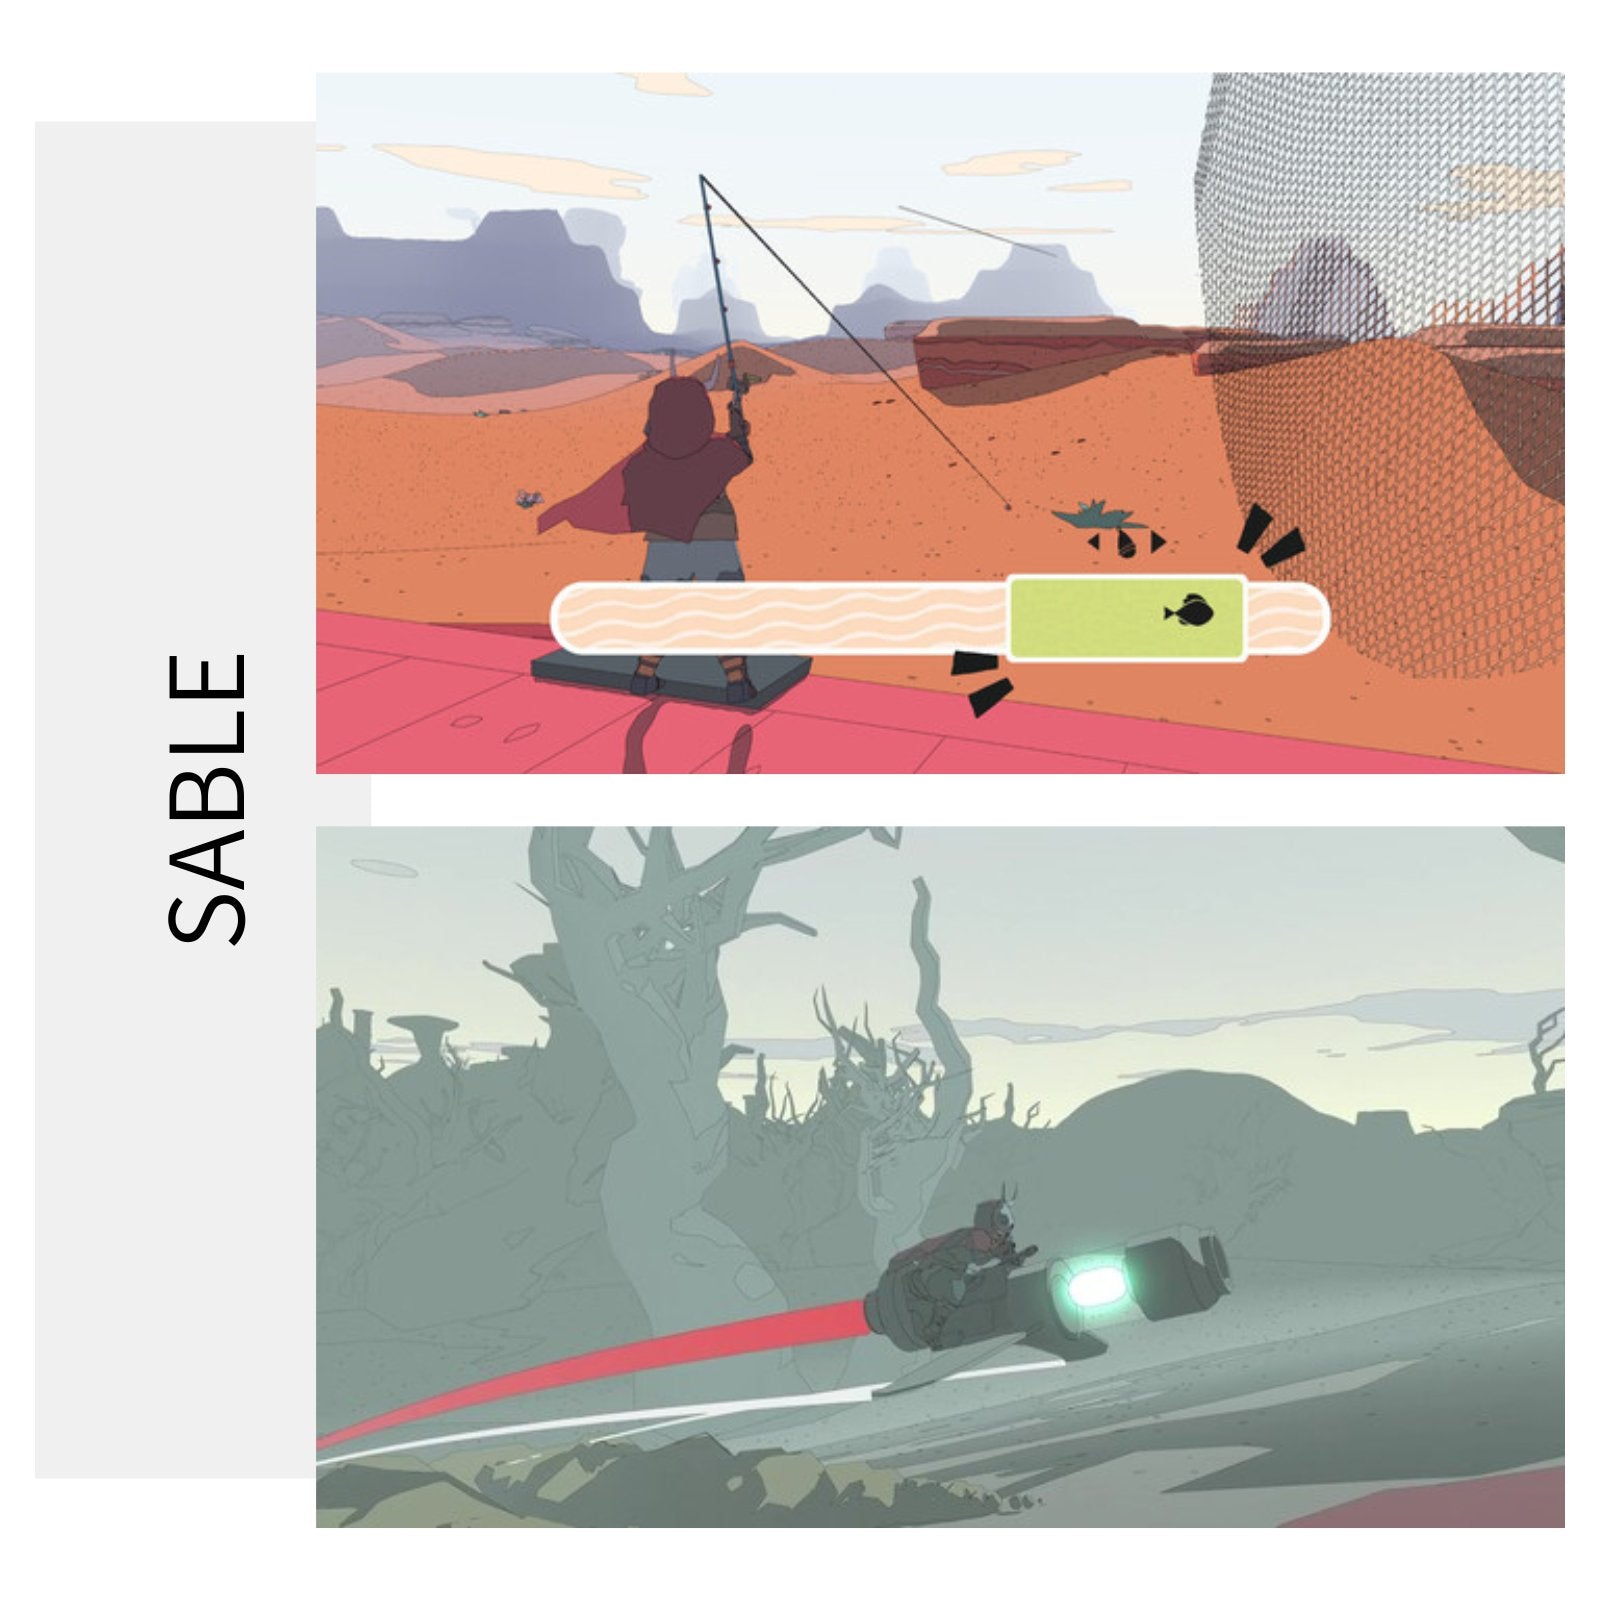 Sable | PC Game Steam Key - Killonyi